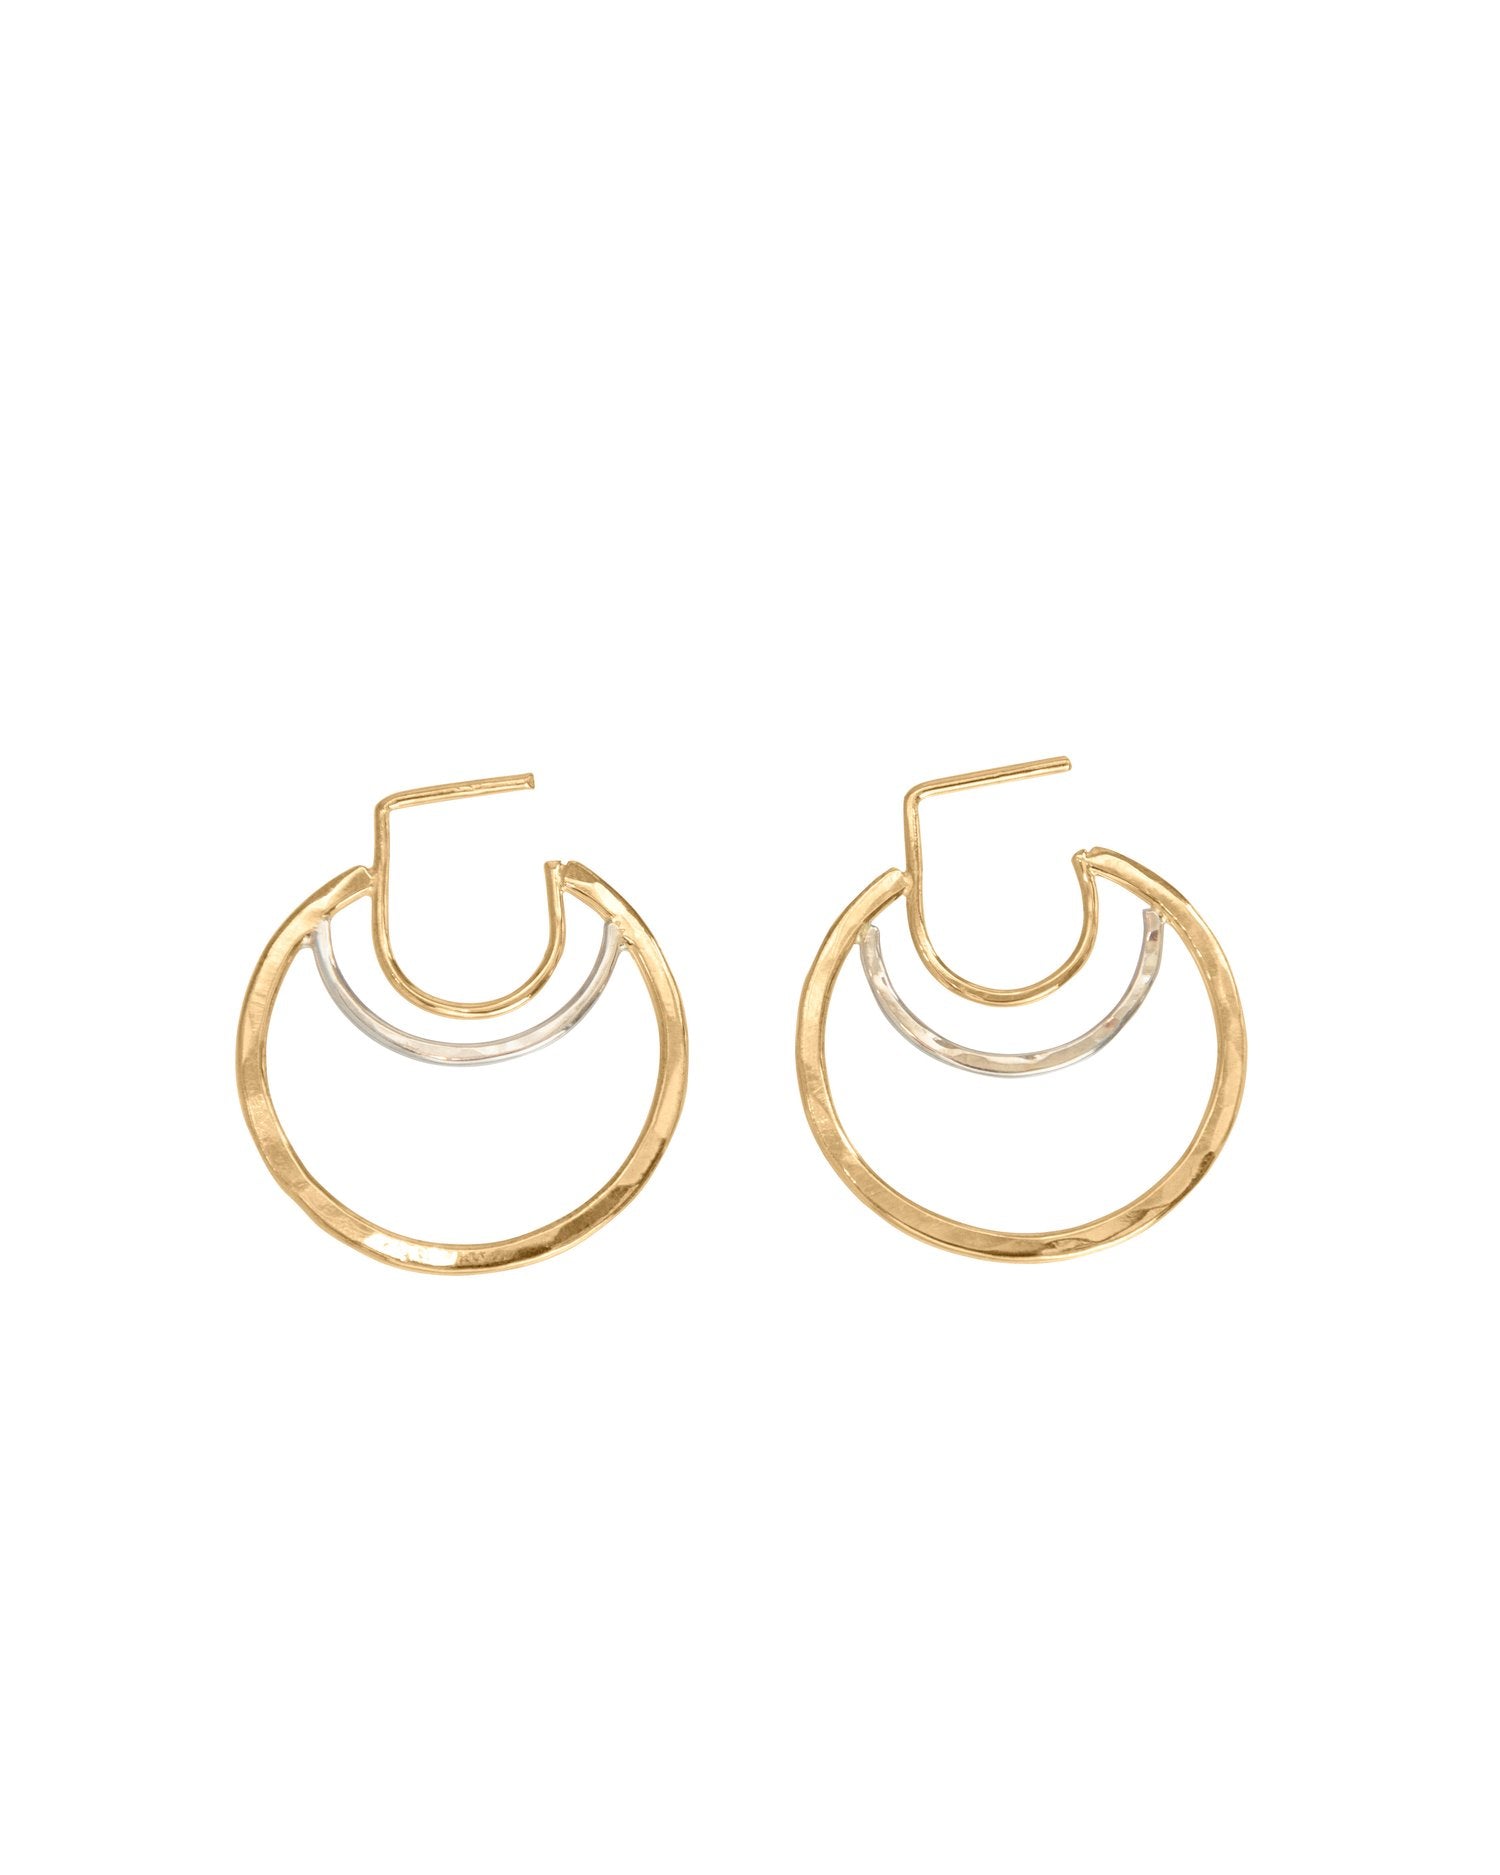 AELLA // greek amazon warrior gold fill exterior hoop earrings 